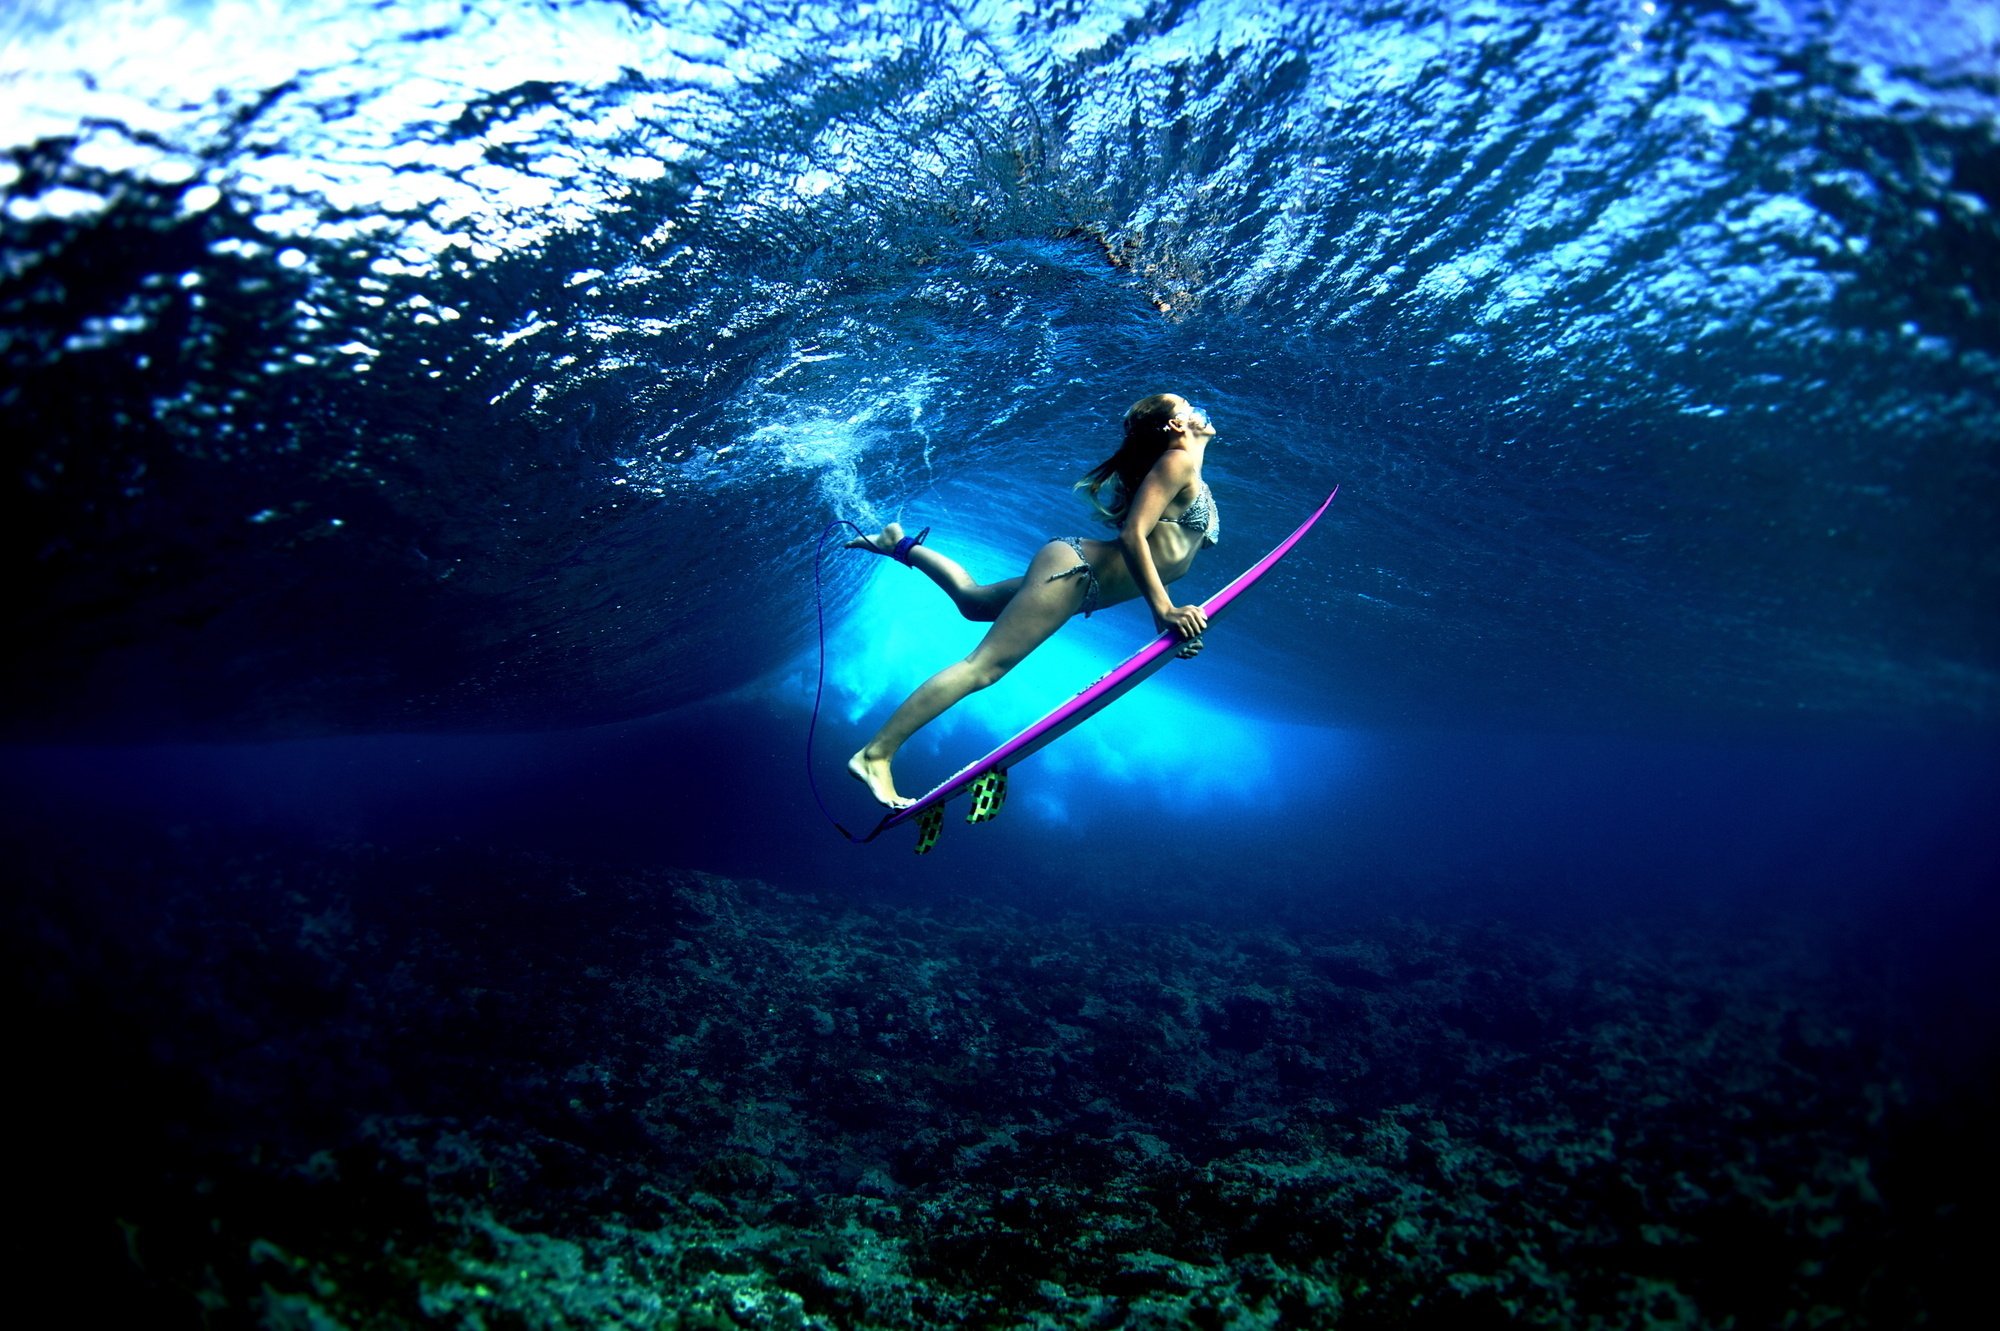 Free Download Girl Surf Surfing Bikini Sexy Babe Underwater Wallpaper Background [2000x1331] For